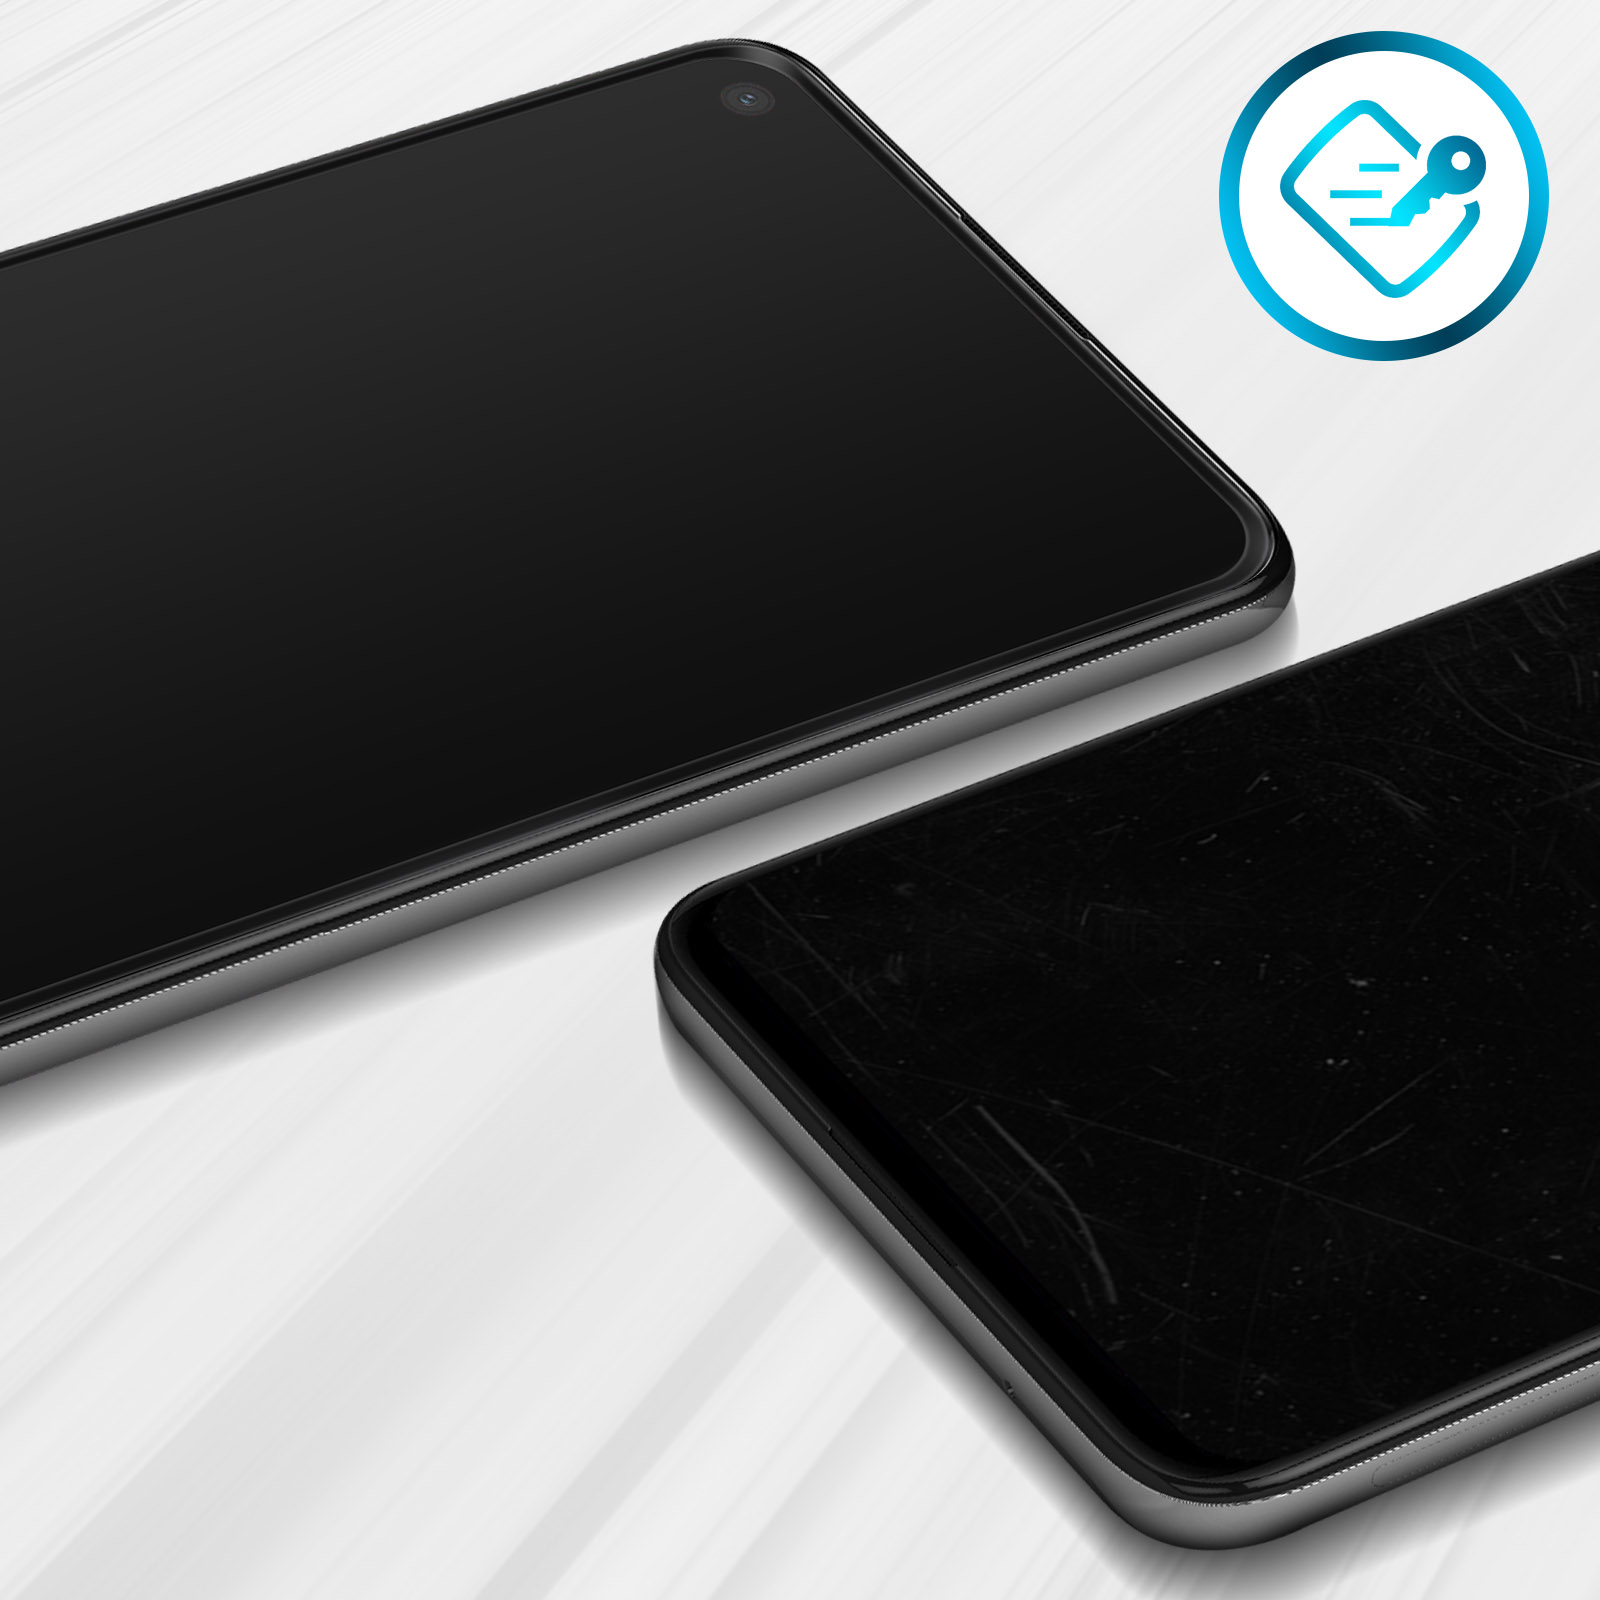 Ecran Display LCD Complet Noir Pour Xiaomi Mi 11 Lite 4G/5G